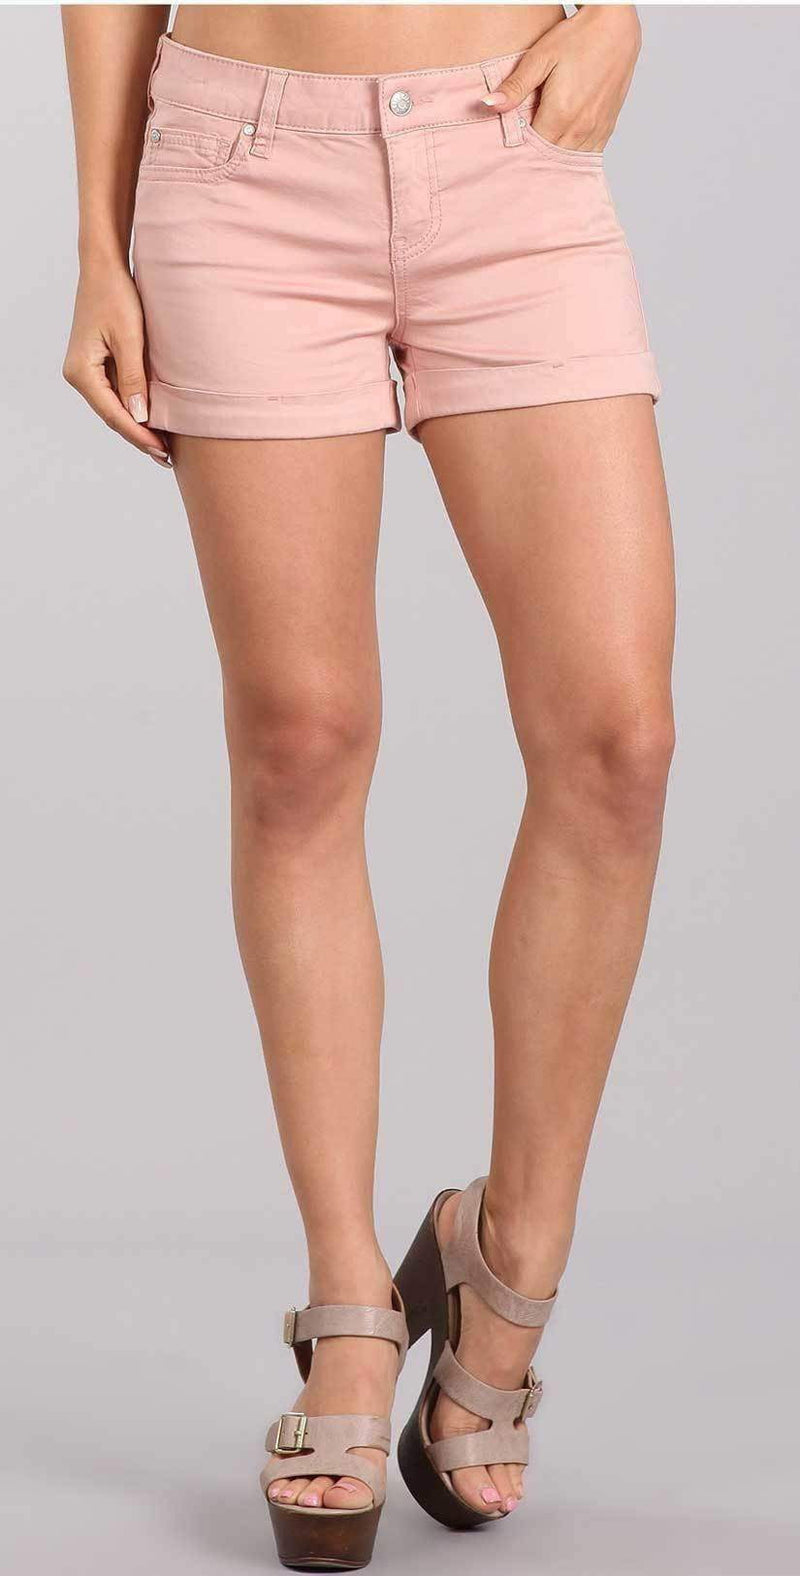 Celebrity Pink Jean 3" Mid Rise Shorts in Misty Rose CJ3050Z35: